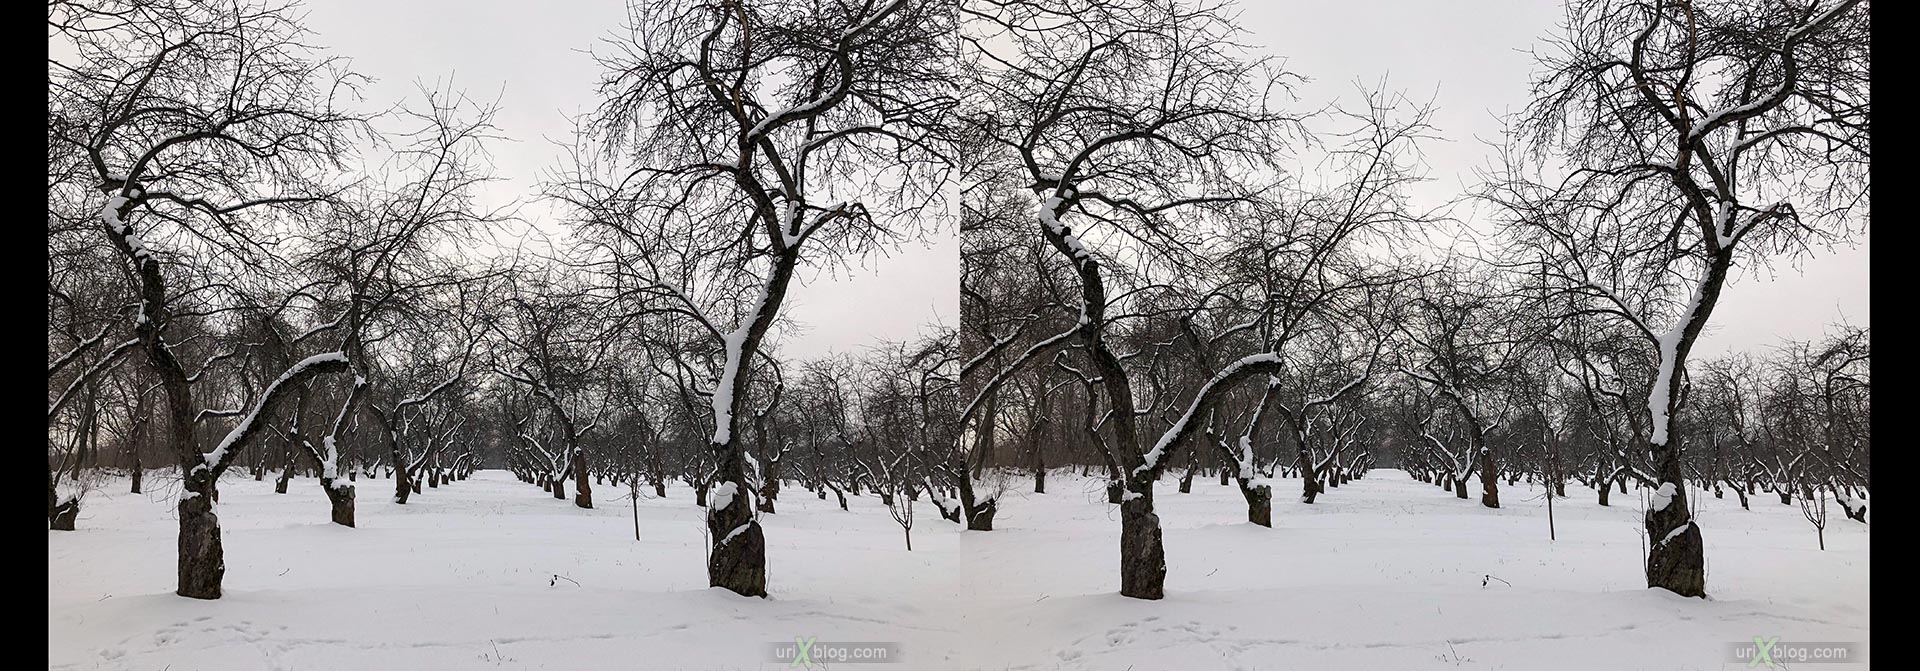 Apple orchard, Kolomenskoye park, winter, snow, Russia, 3D, stereo pair, cross-eyed, crossview, cross view stereo pair, stereoscopic